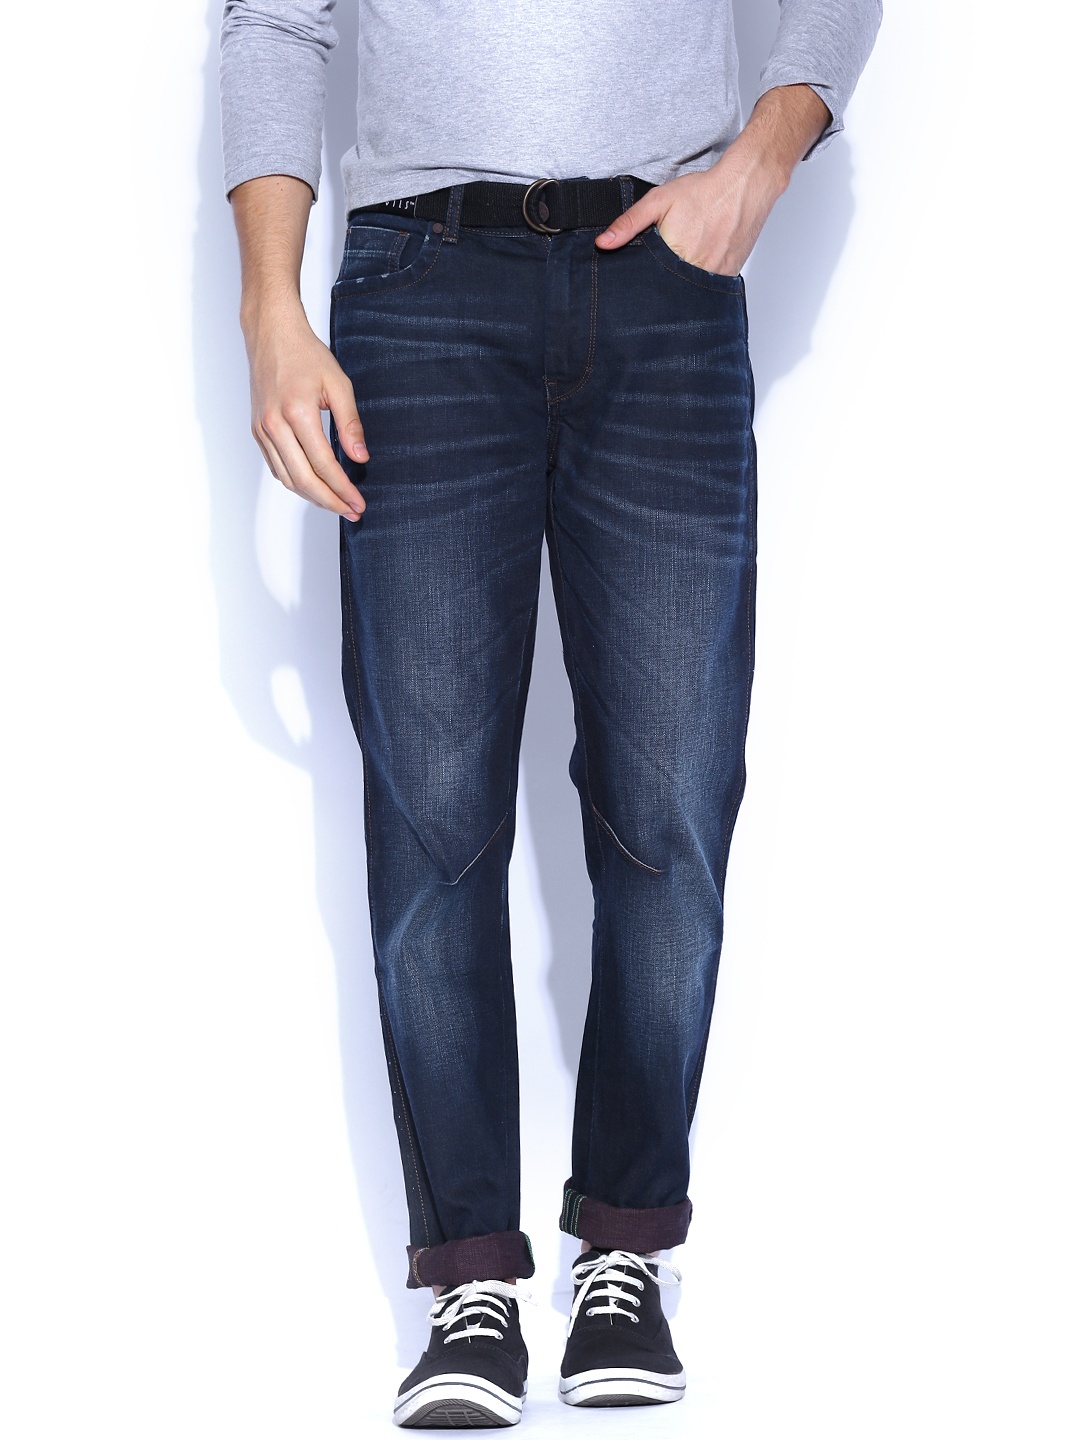 Myntra HRX Men Blue Jeans 320382 | Buy Myntra HRX Jeans at best price online. All myntra 